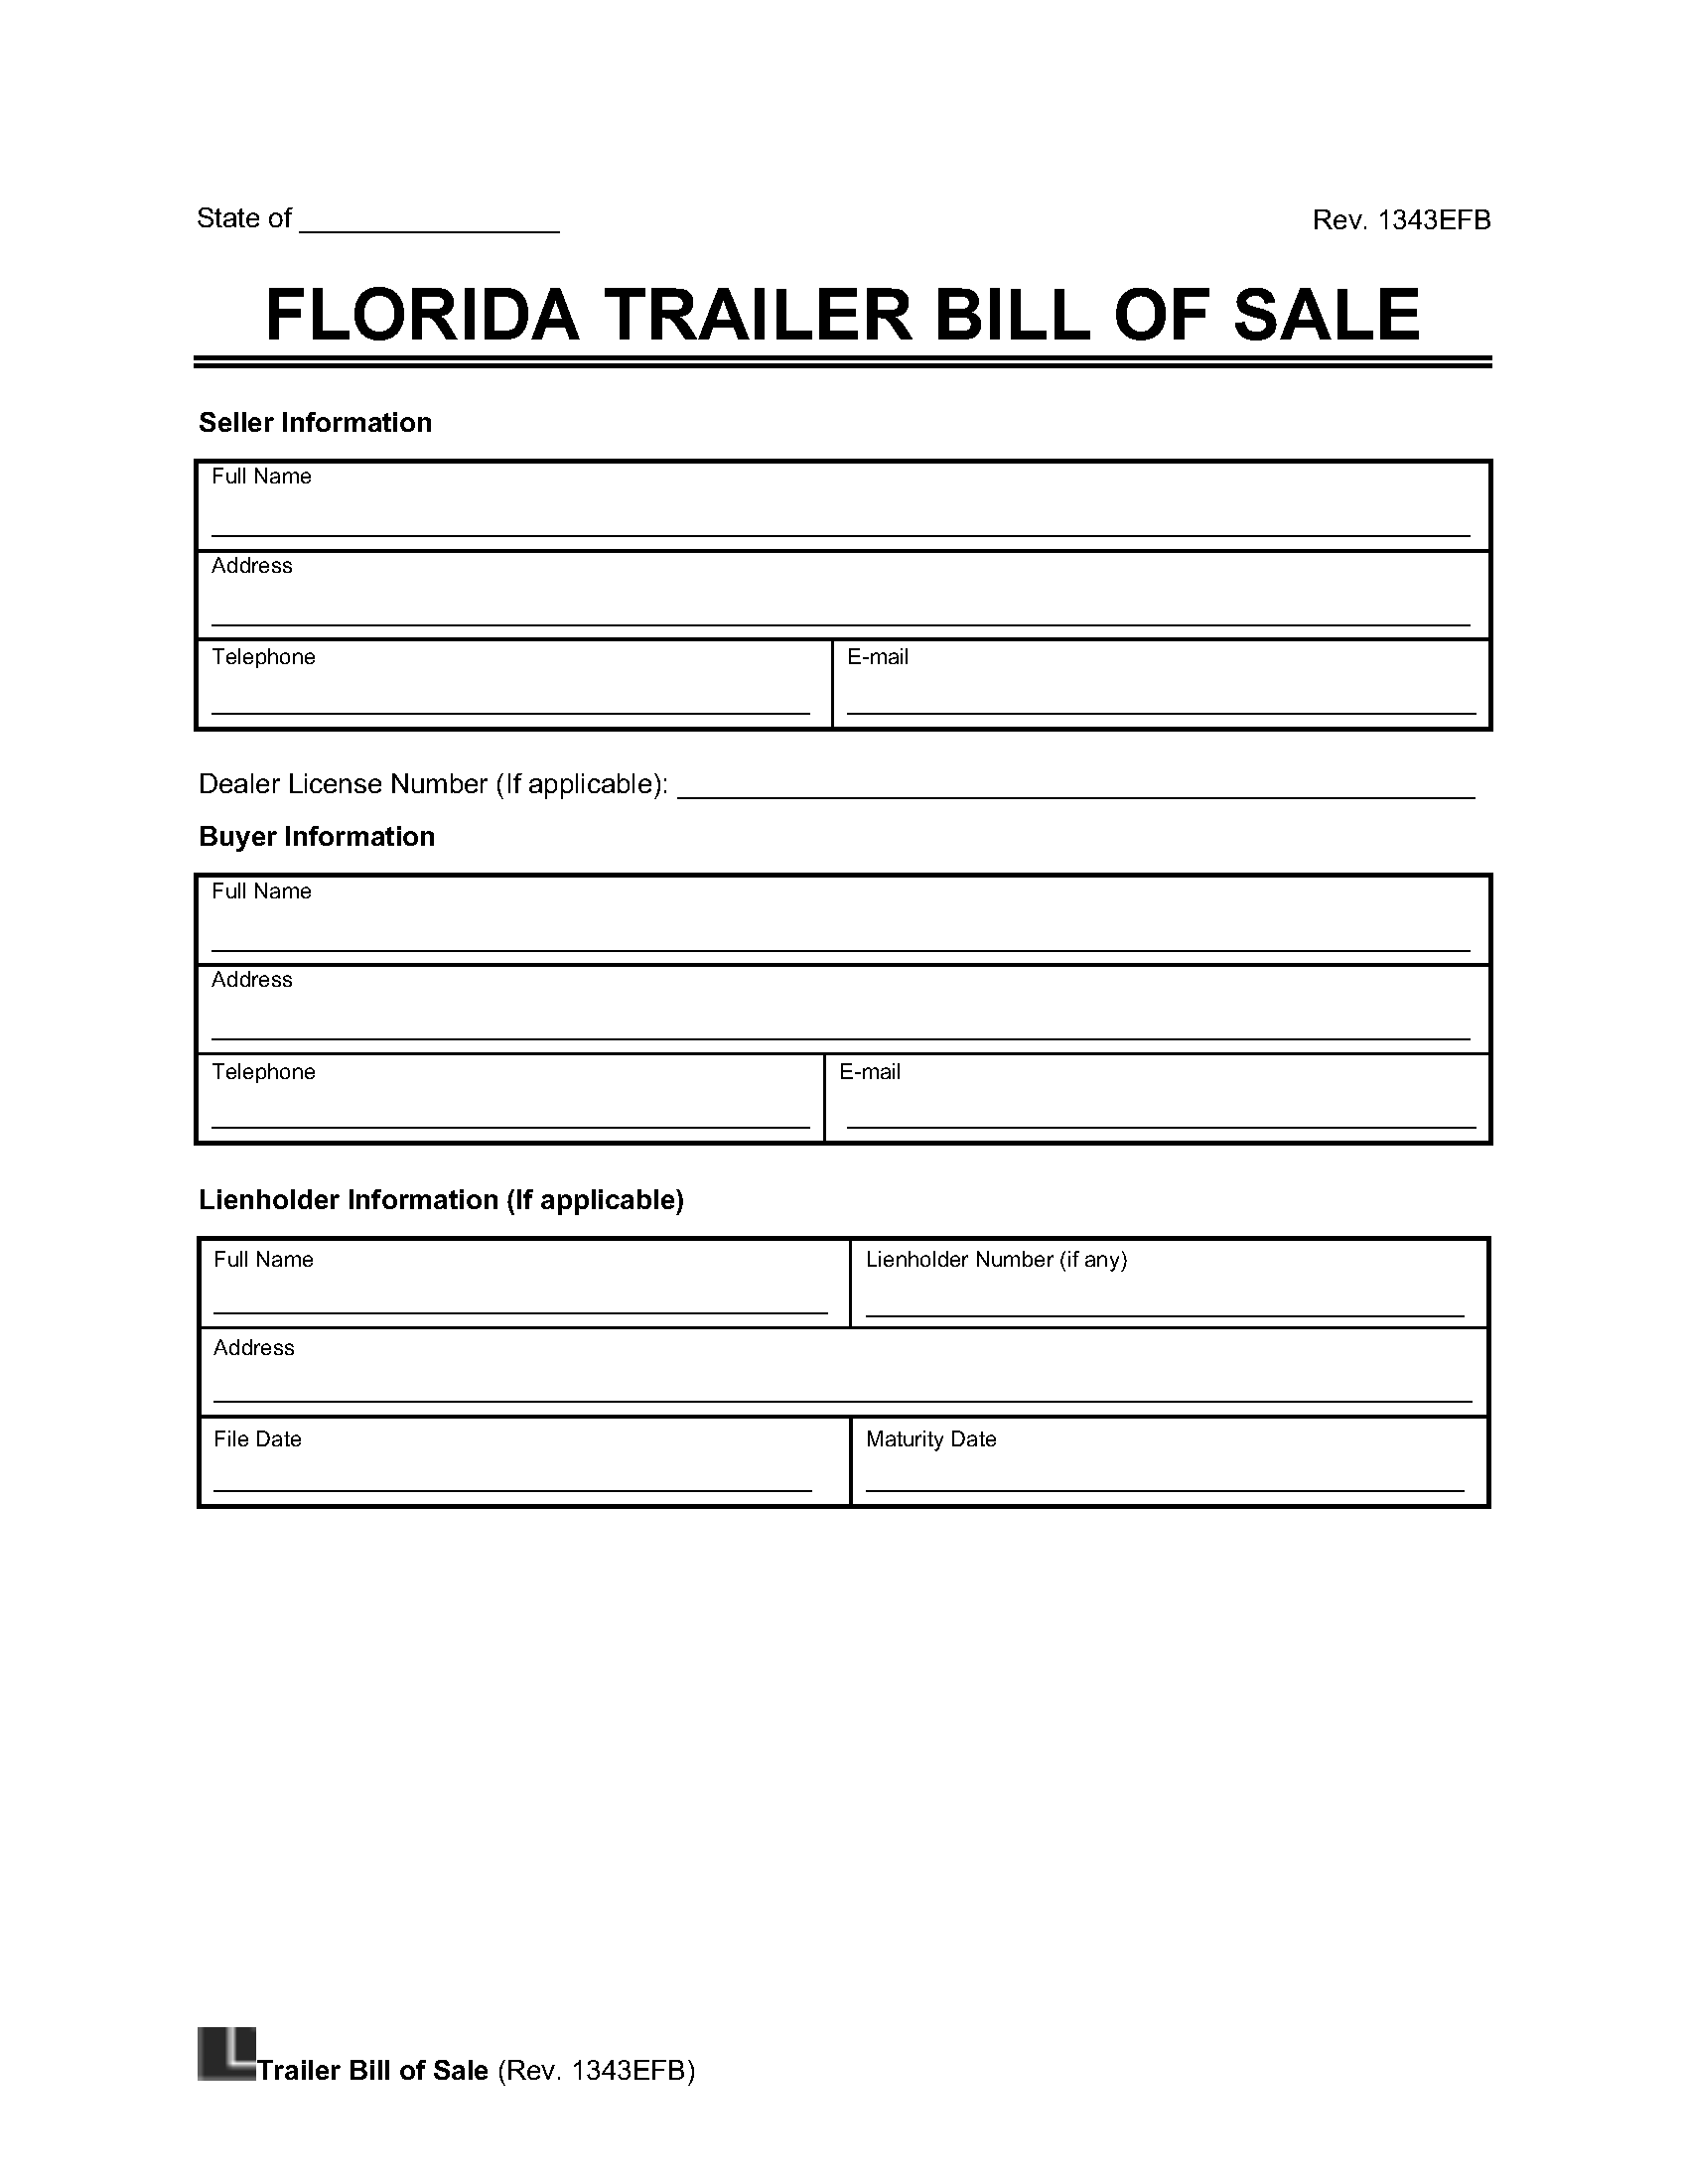 Florida Trailer Bill of Sale screenshot